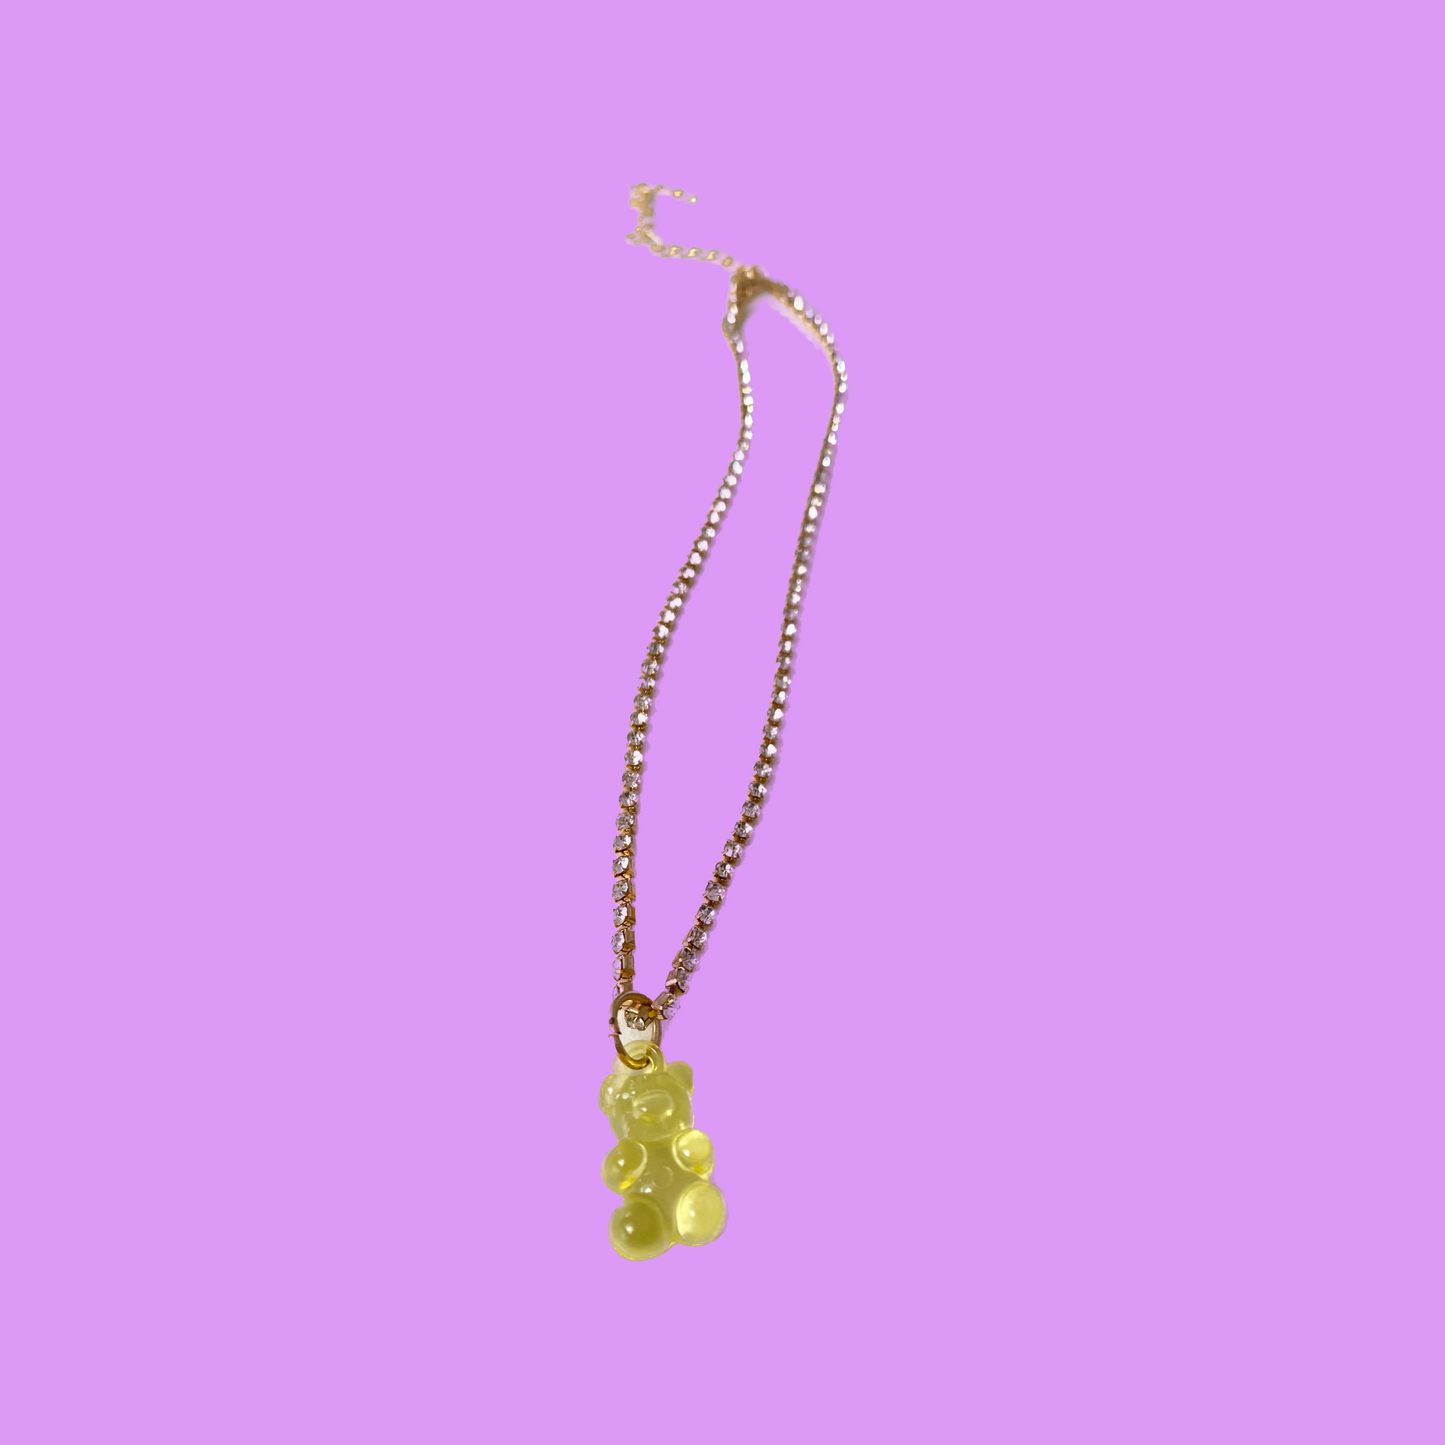 Gummy bear necklace